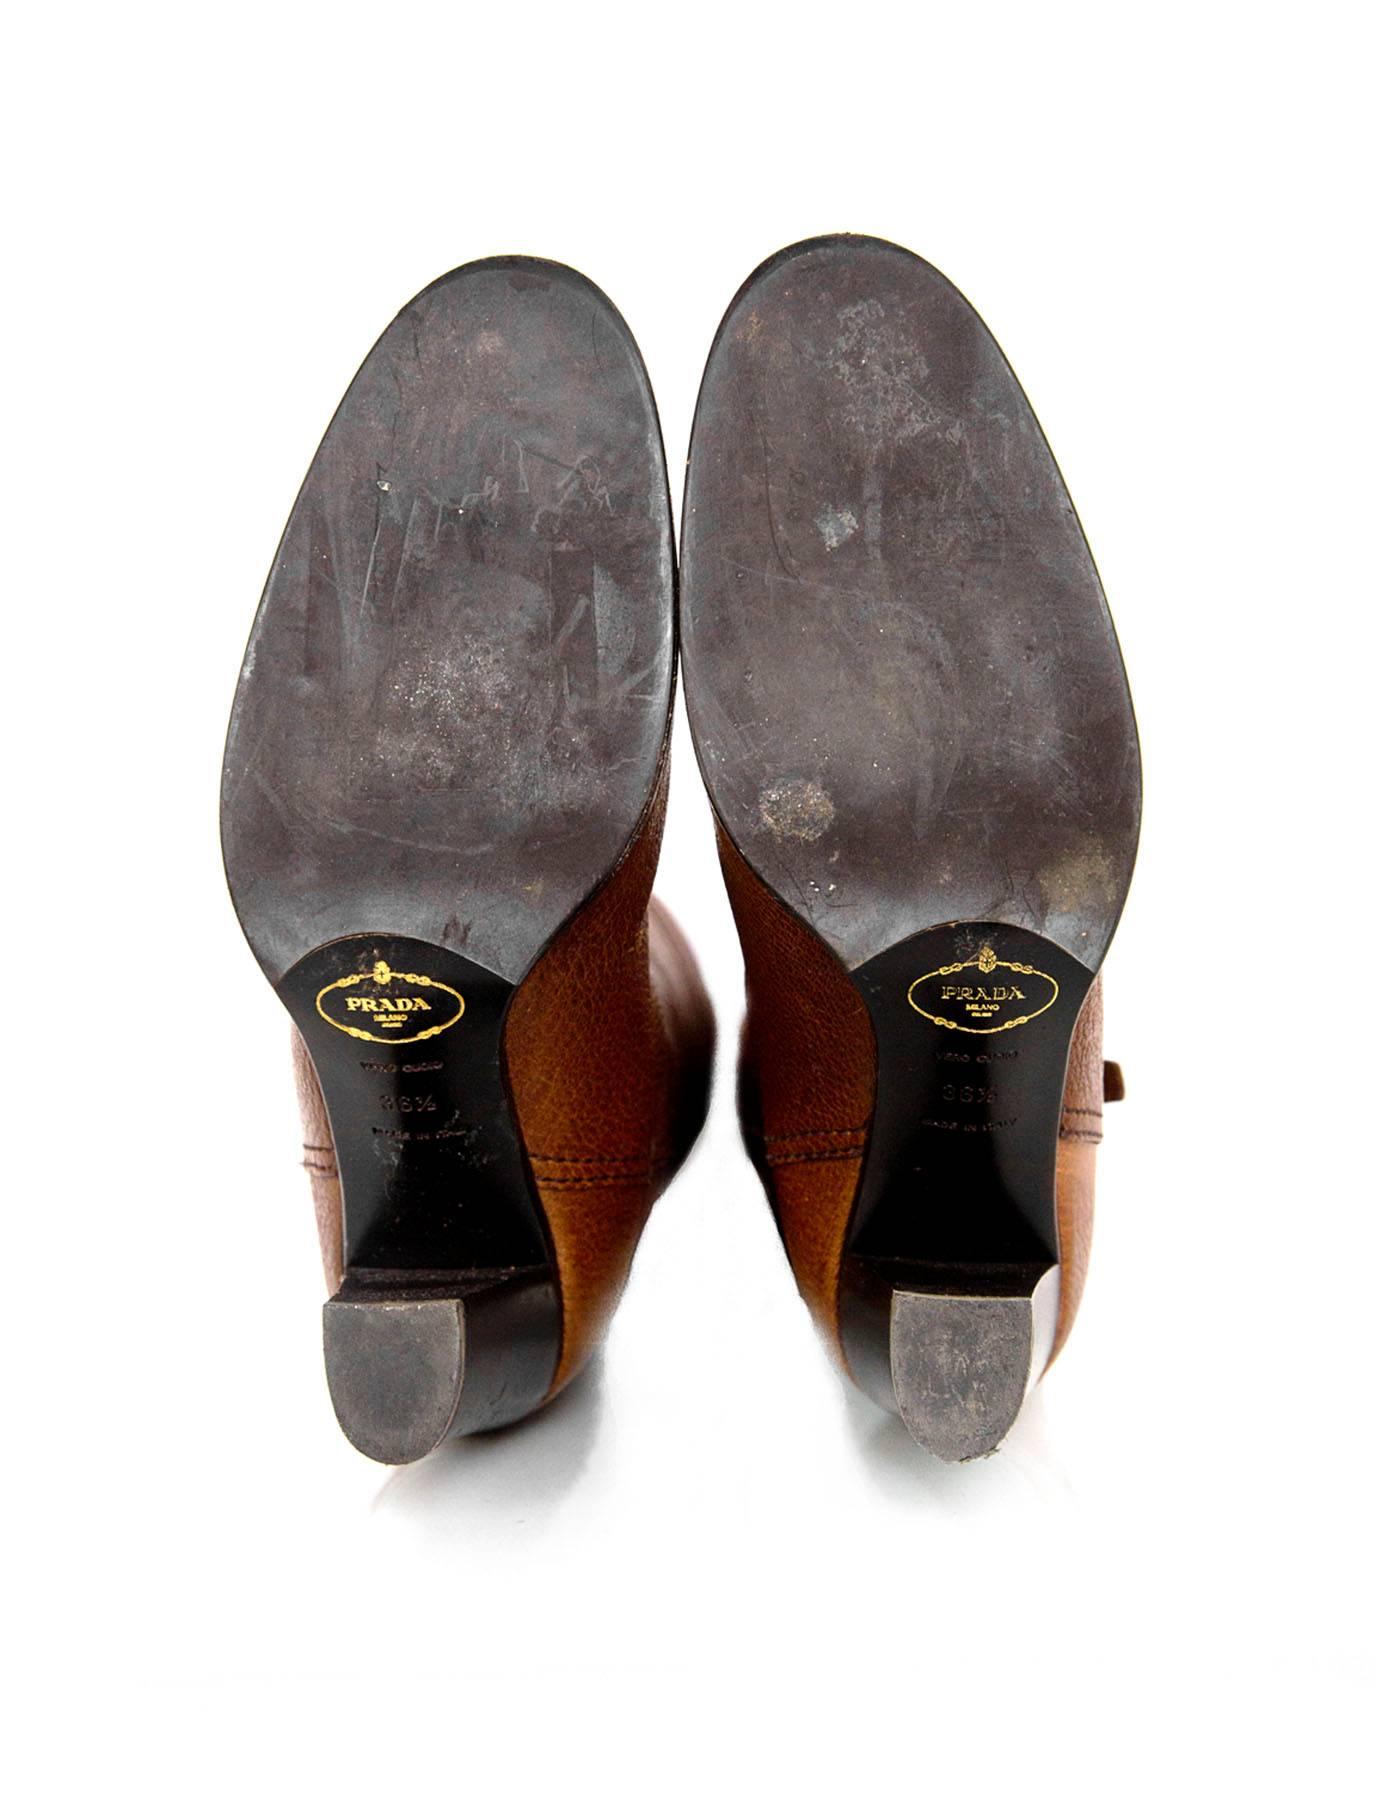 Prada Brown Leather Heeled Boots sz 36.5 2